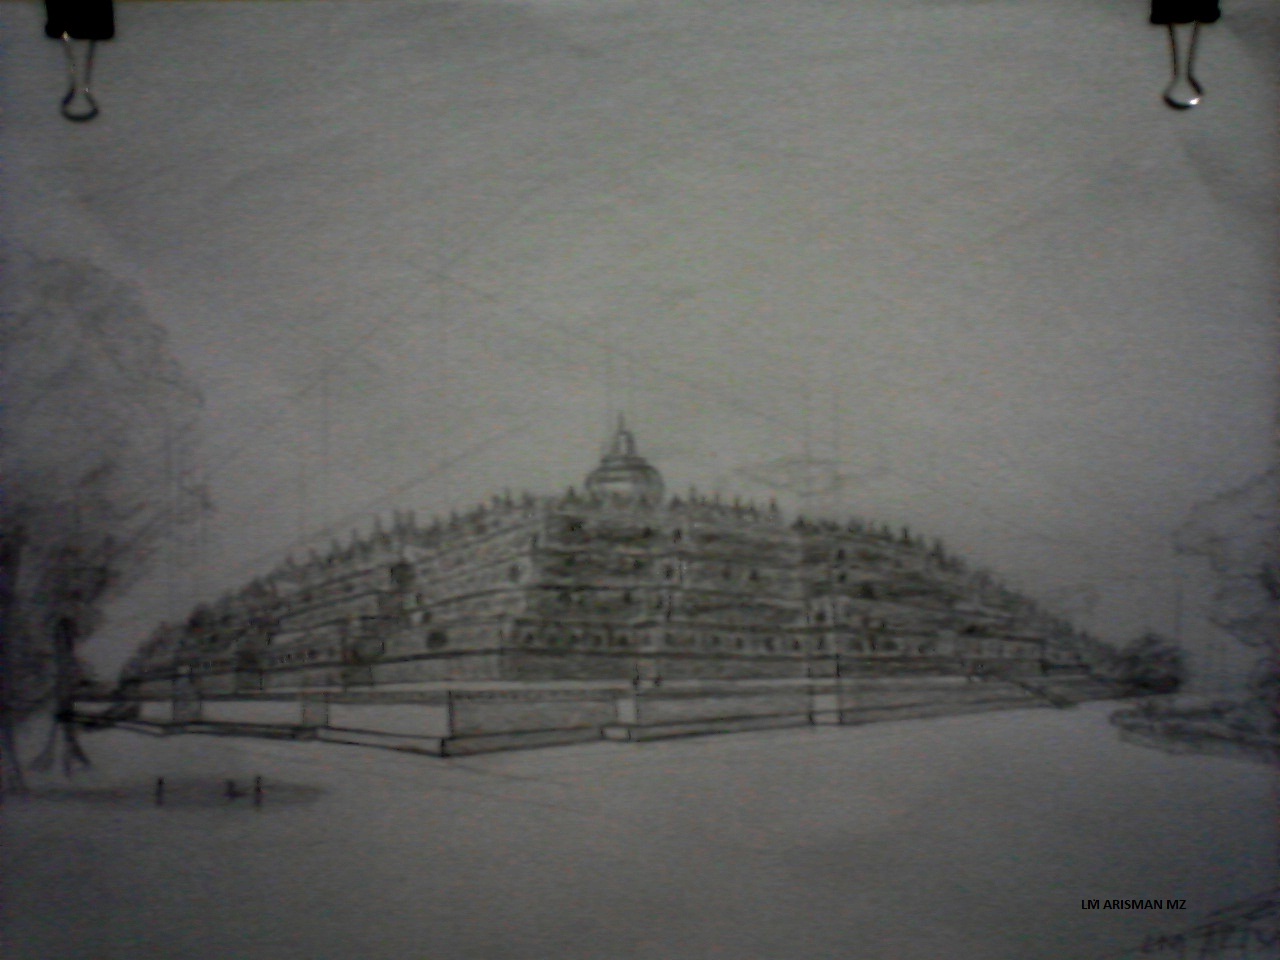 Koleksi Gambar Sketsa Pensil Candi Borobudur Aliransket